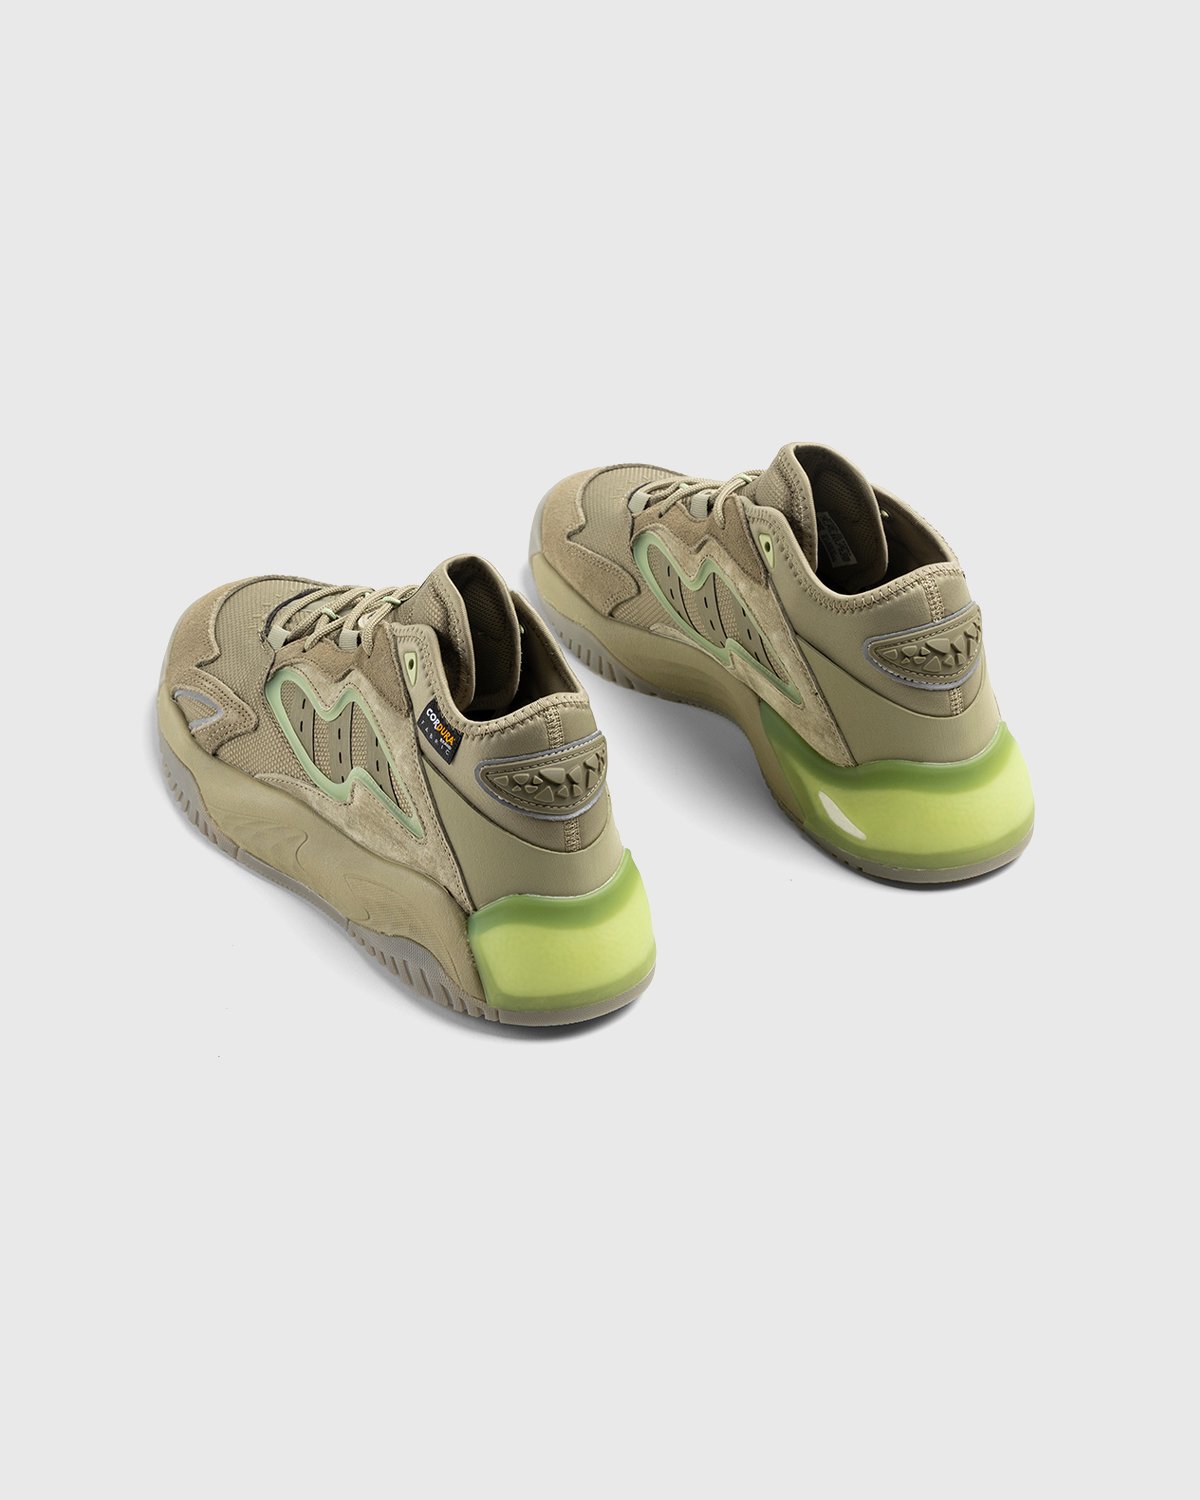 Adidas - Streetball 2 Orbit Green/Magnet Lime/Core Black - Footwear - Green - Image 4